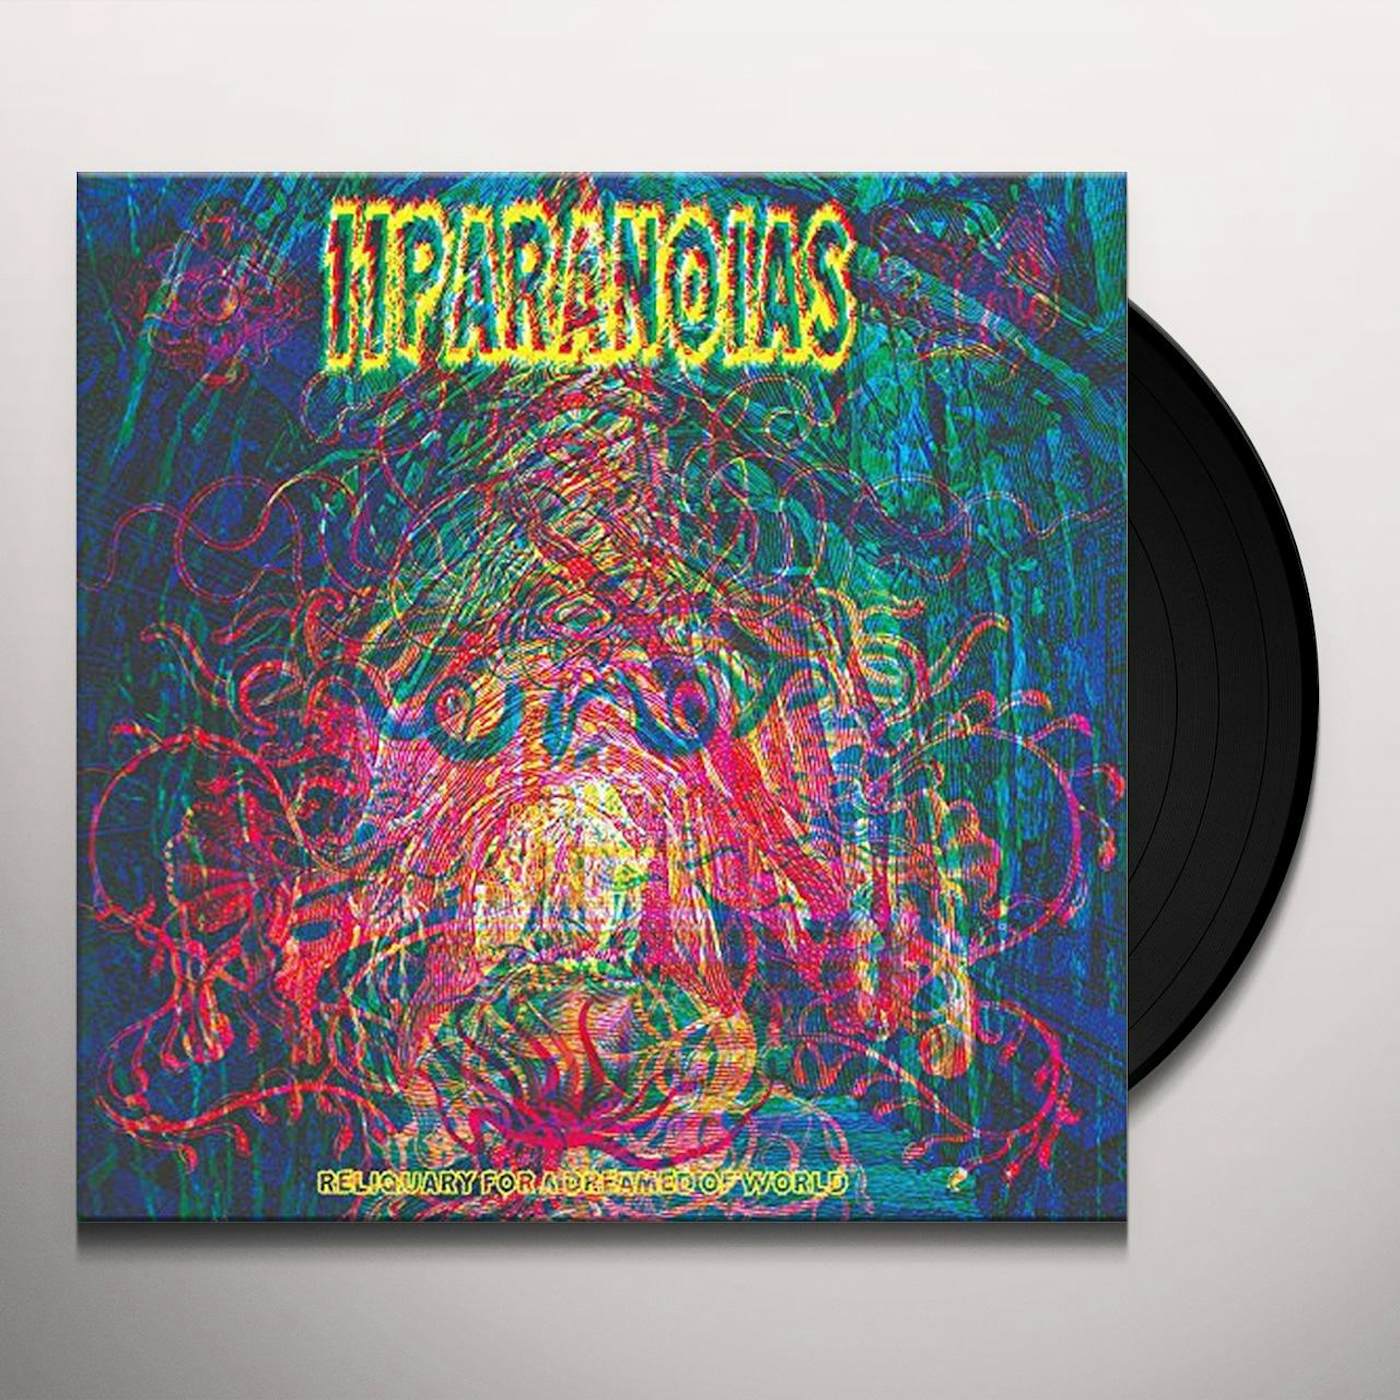 11PARANOIAS RELIQUARY FOR A DREAMED OF WORLD Vinyl Record